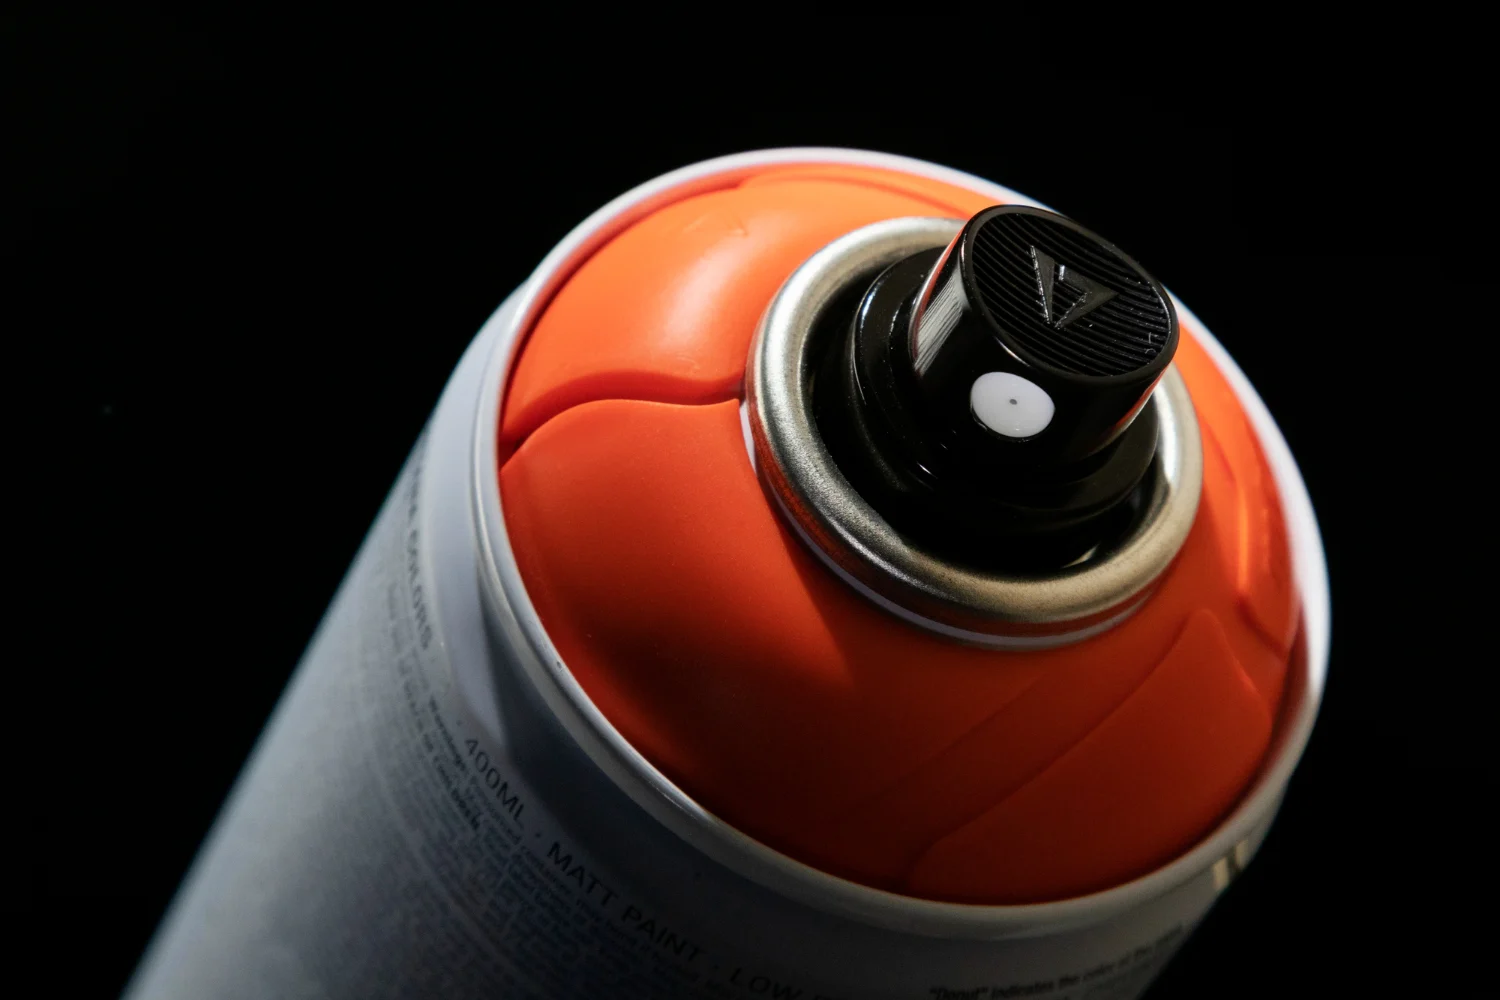 A close up of an orange spray bottle on a black background.